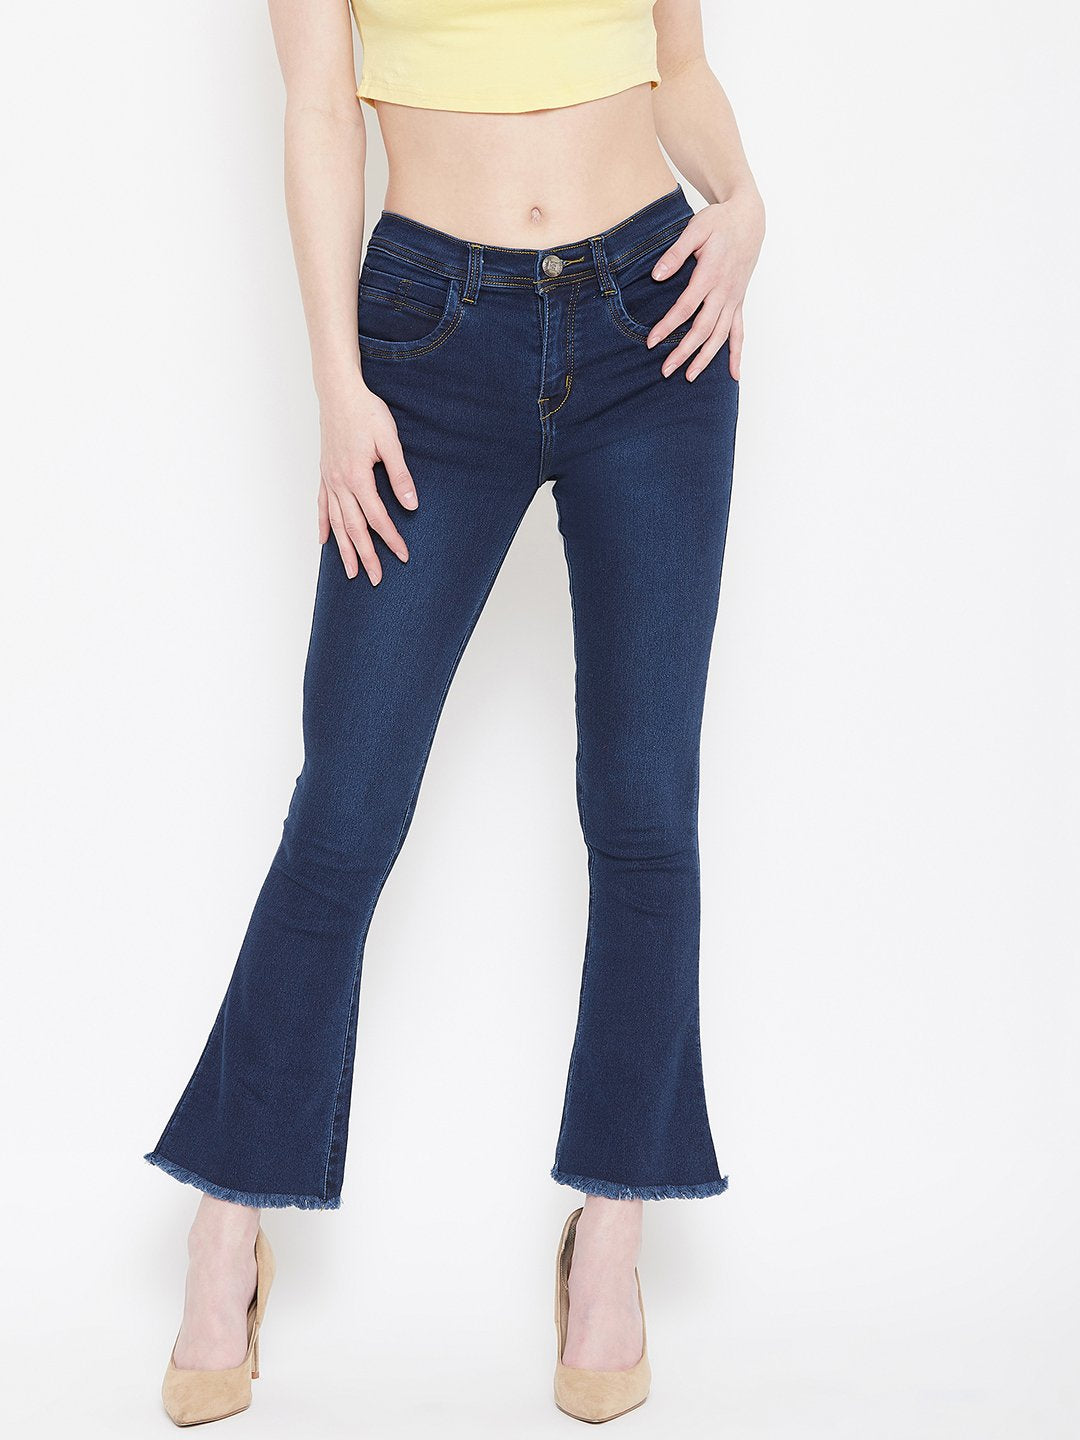 High Waist Boot Cut Basic Blue Jeans - NiftyJeans